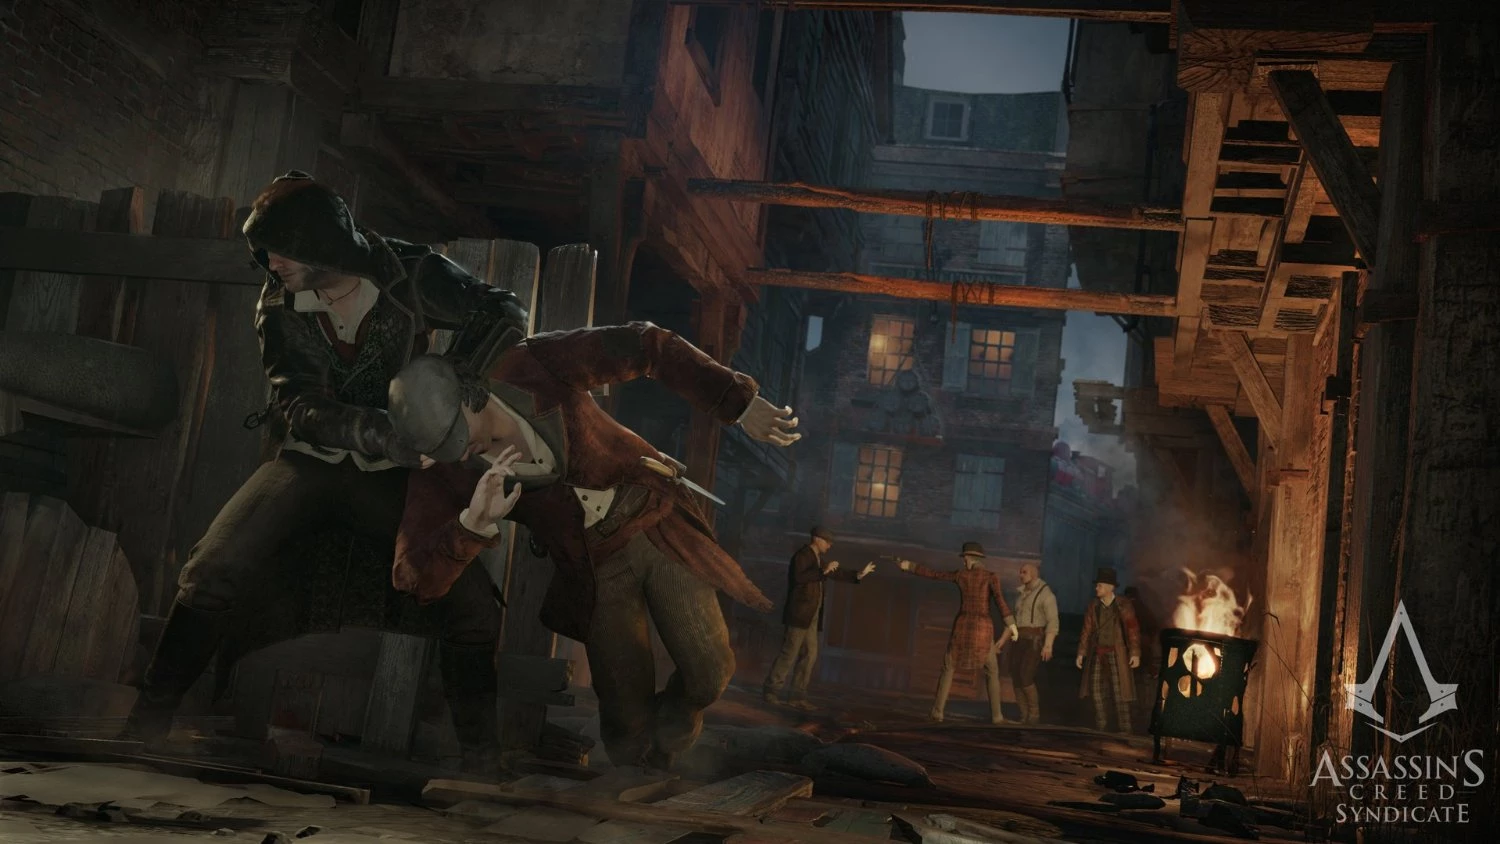 Assassin's Creed Syndicate (greatest hits) voor de Xbox One kopen op nedgame.nl